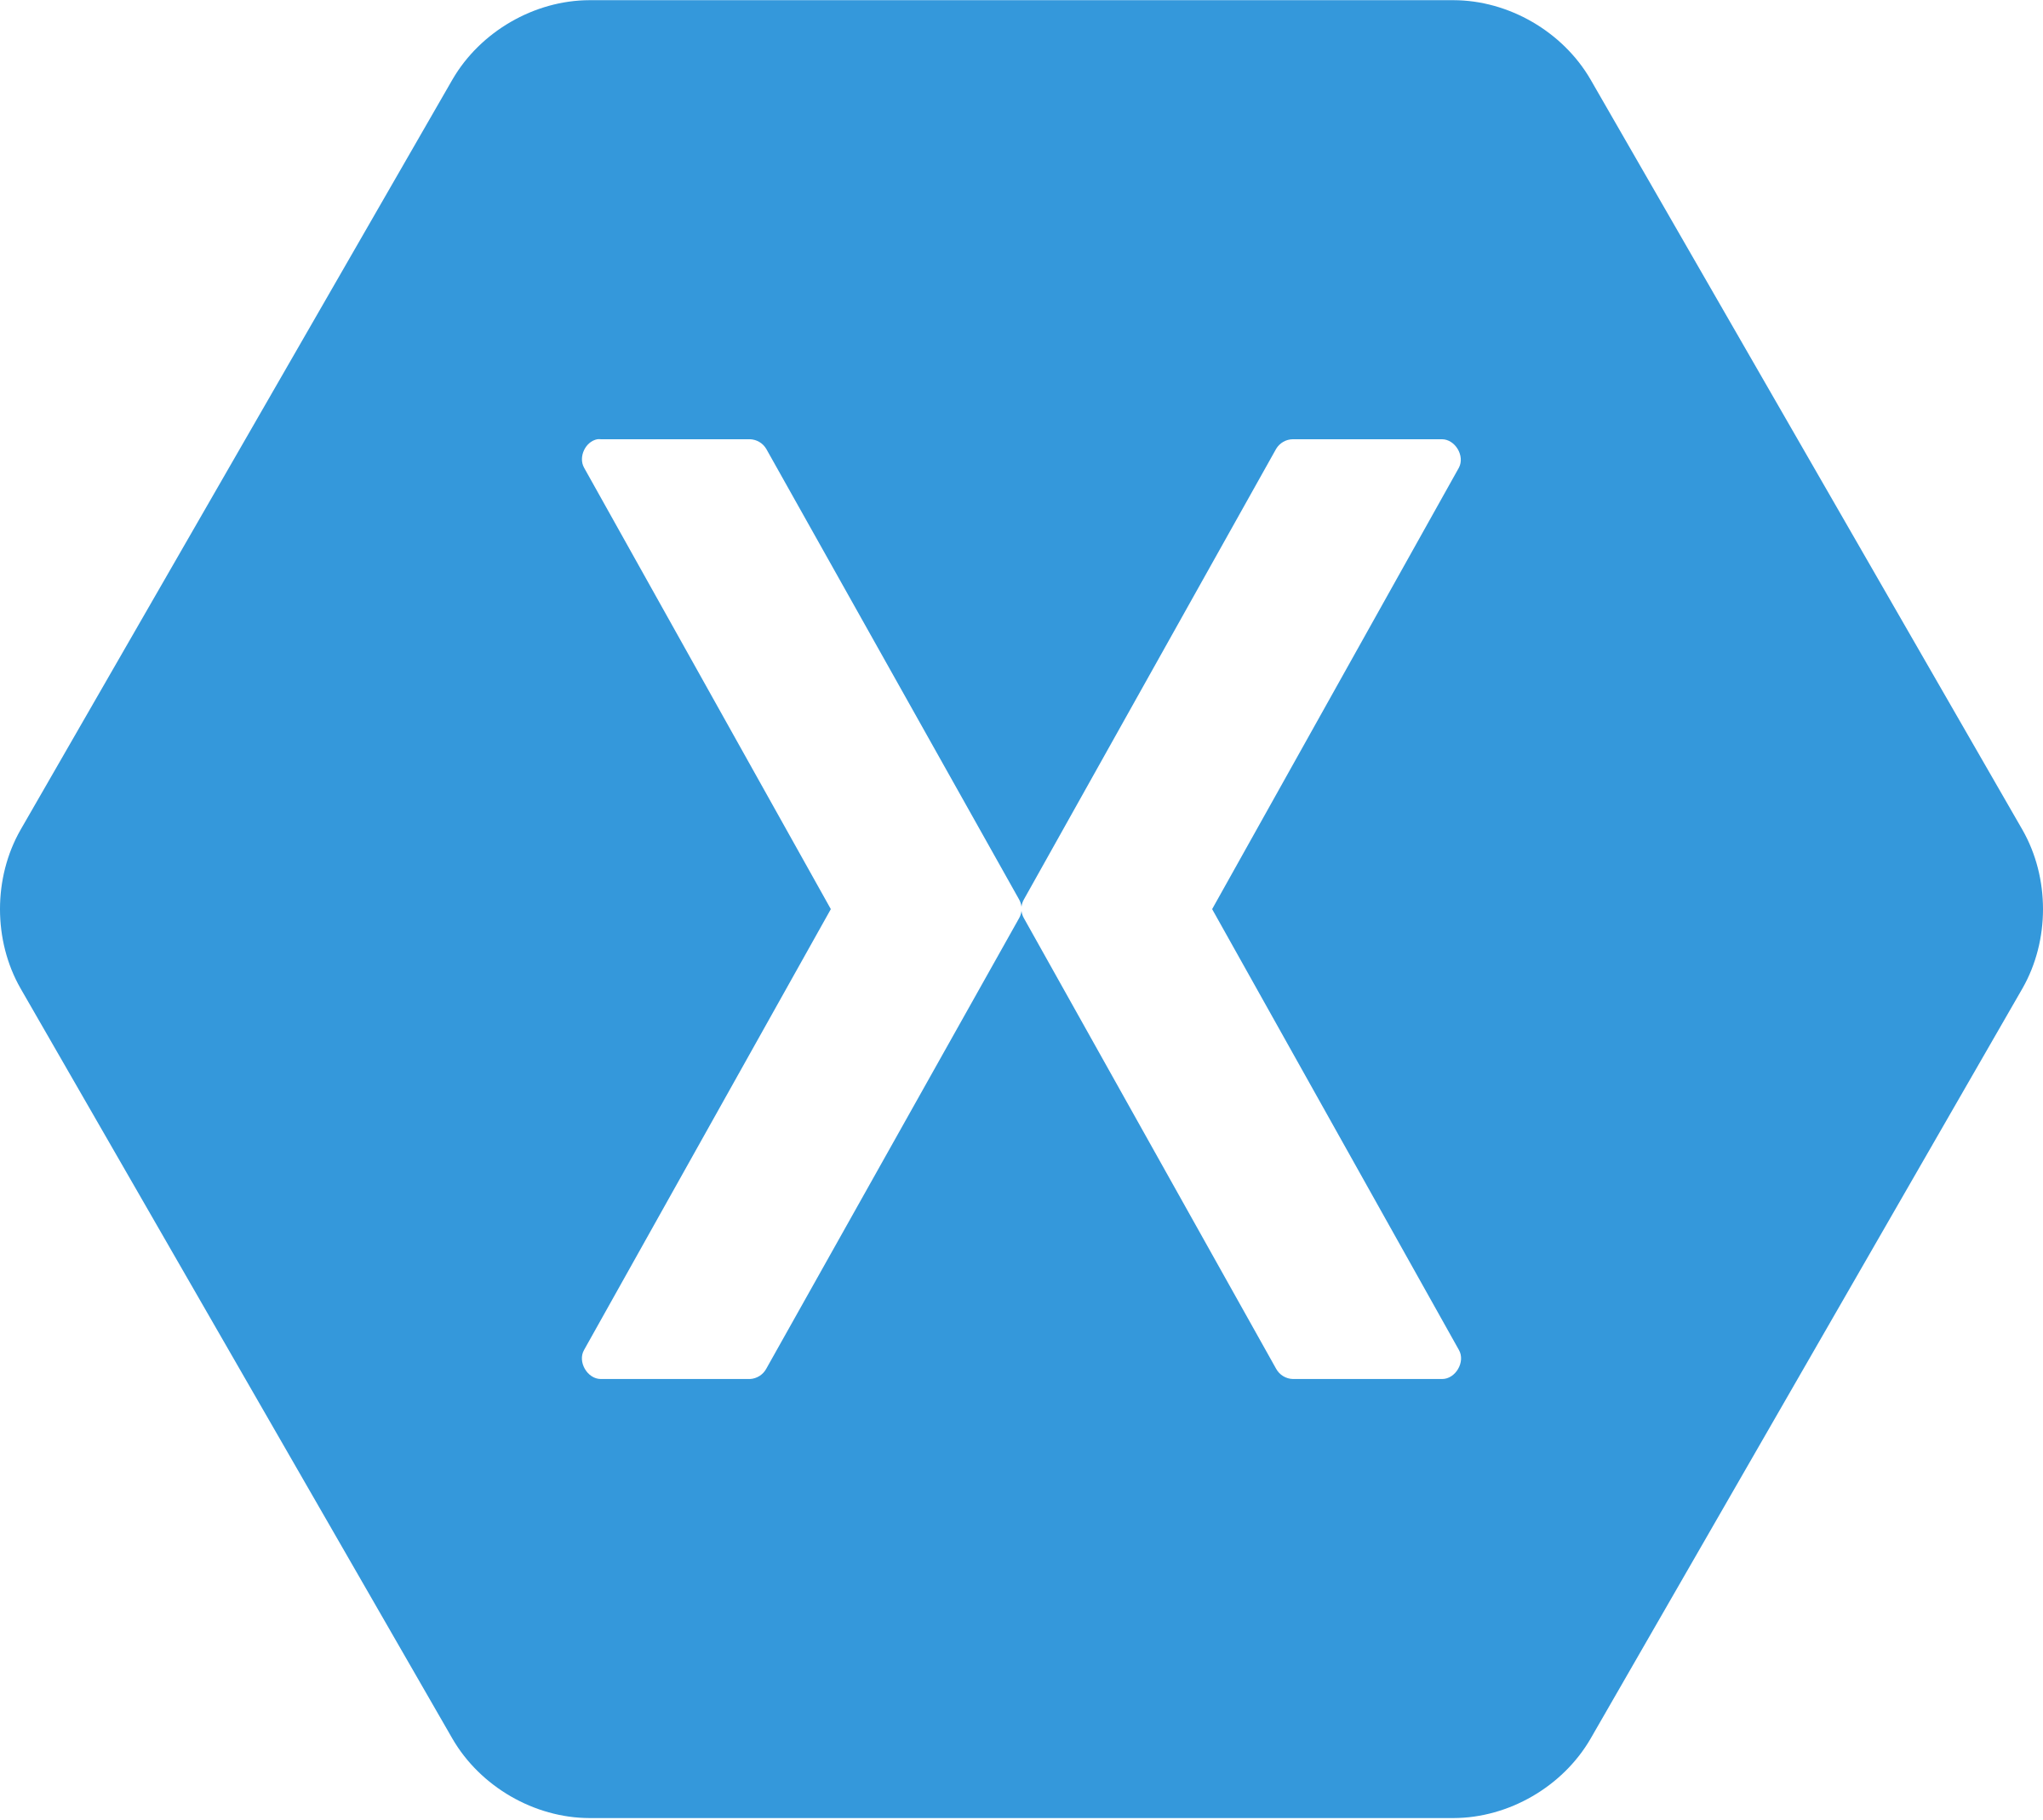 Xamarin as a hybrid app framework